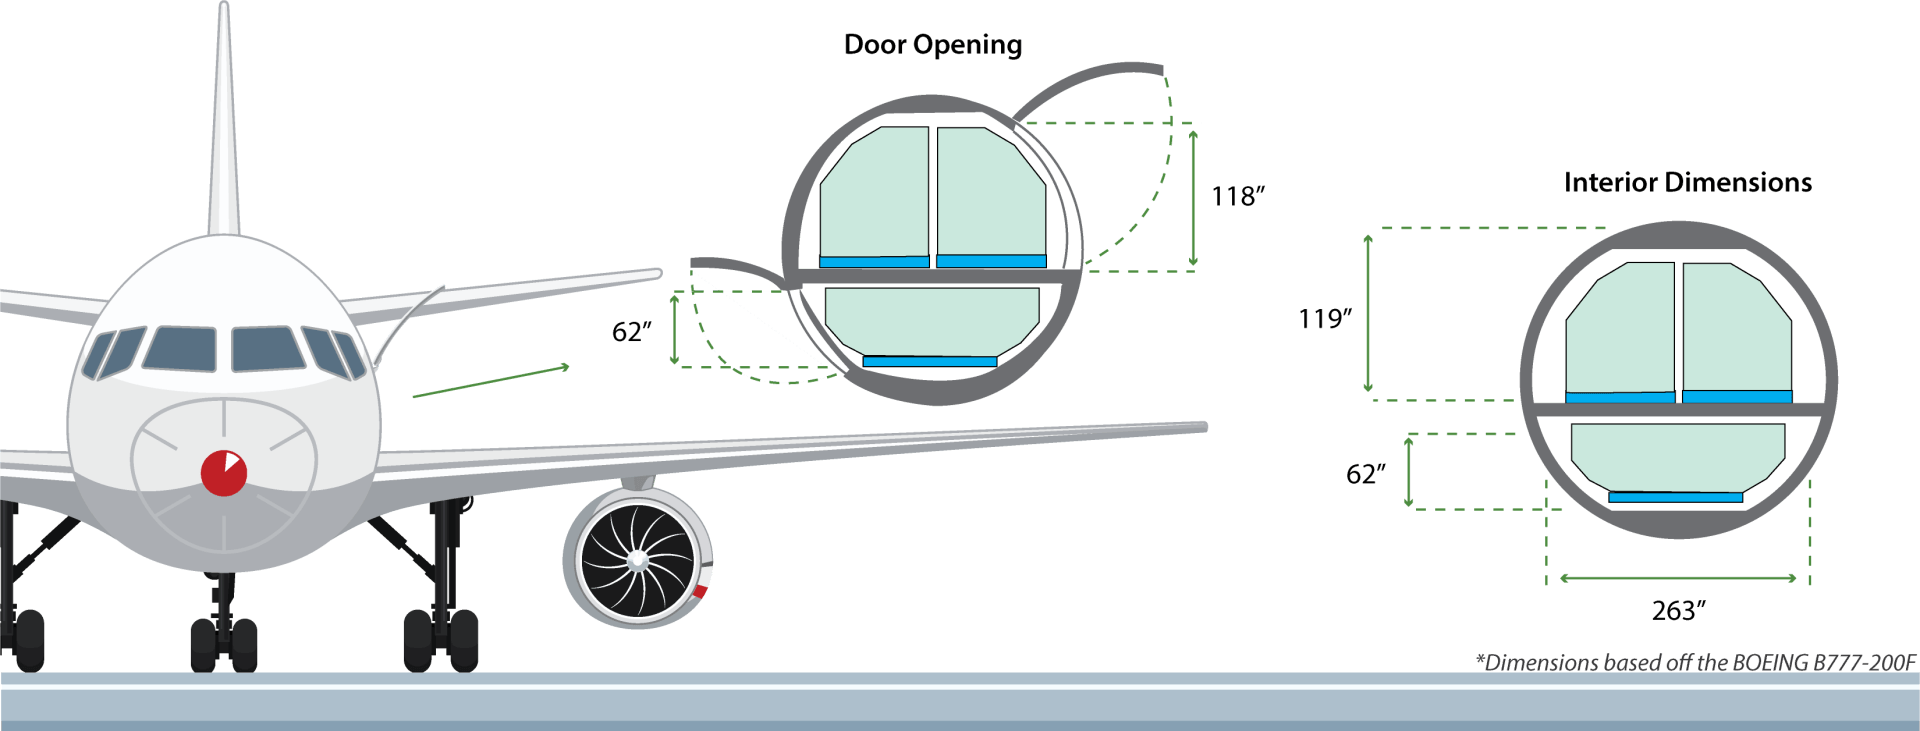 Plane cargo dimensions